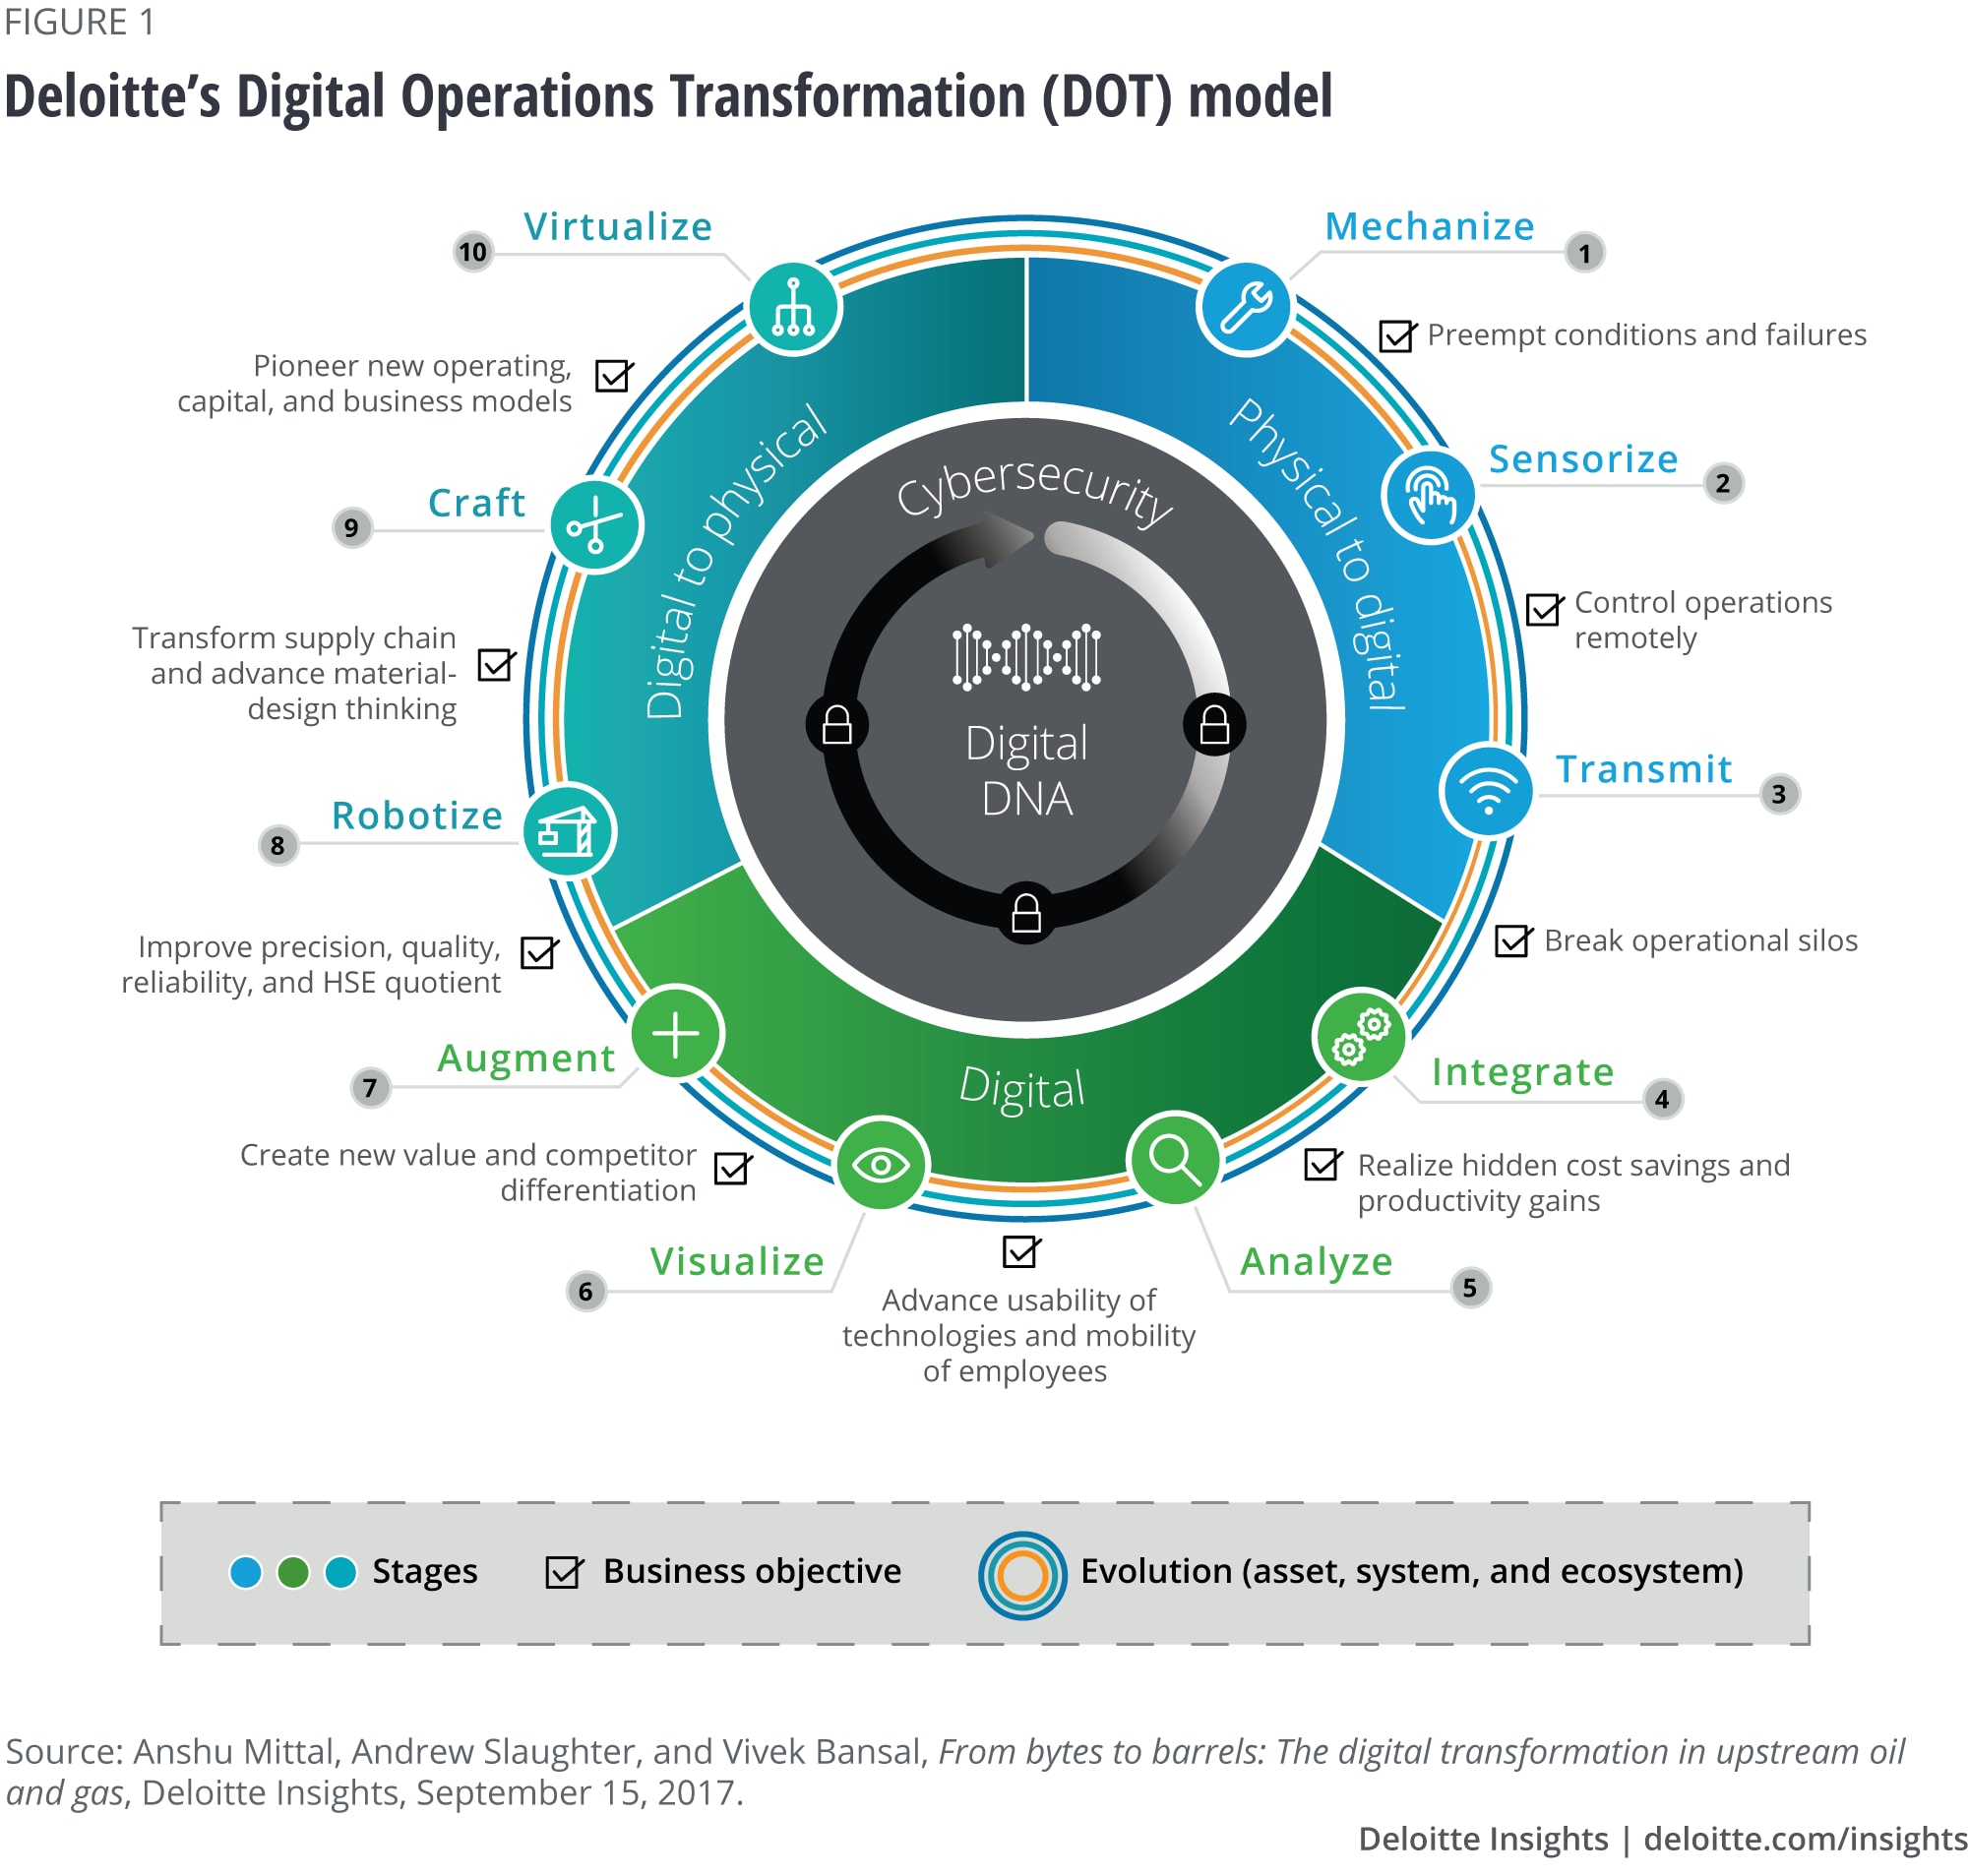 Deloitte’s Digital Operations Transformation (DOT) model